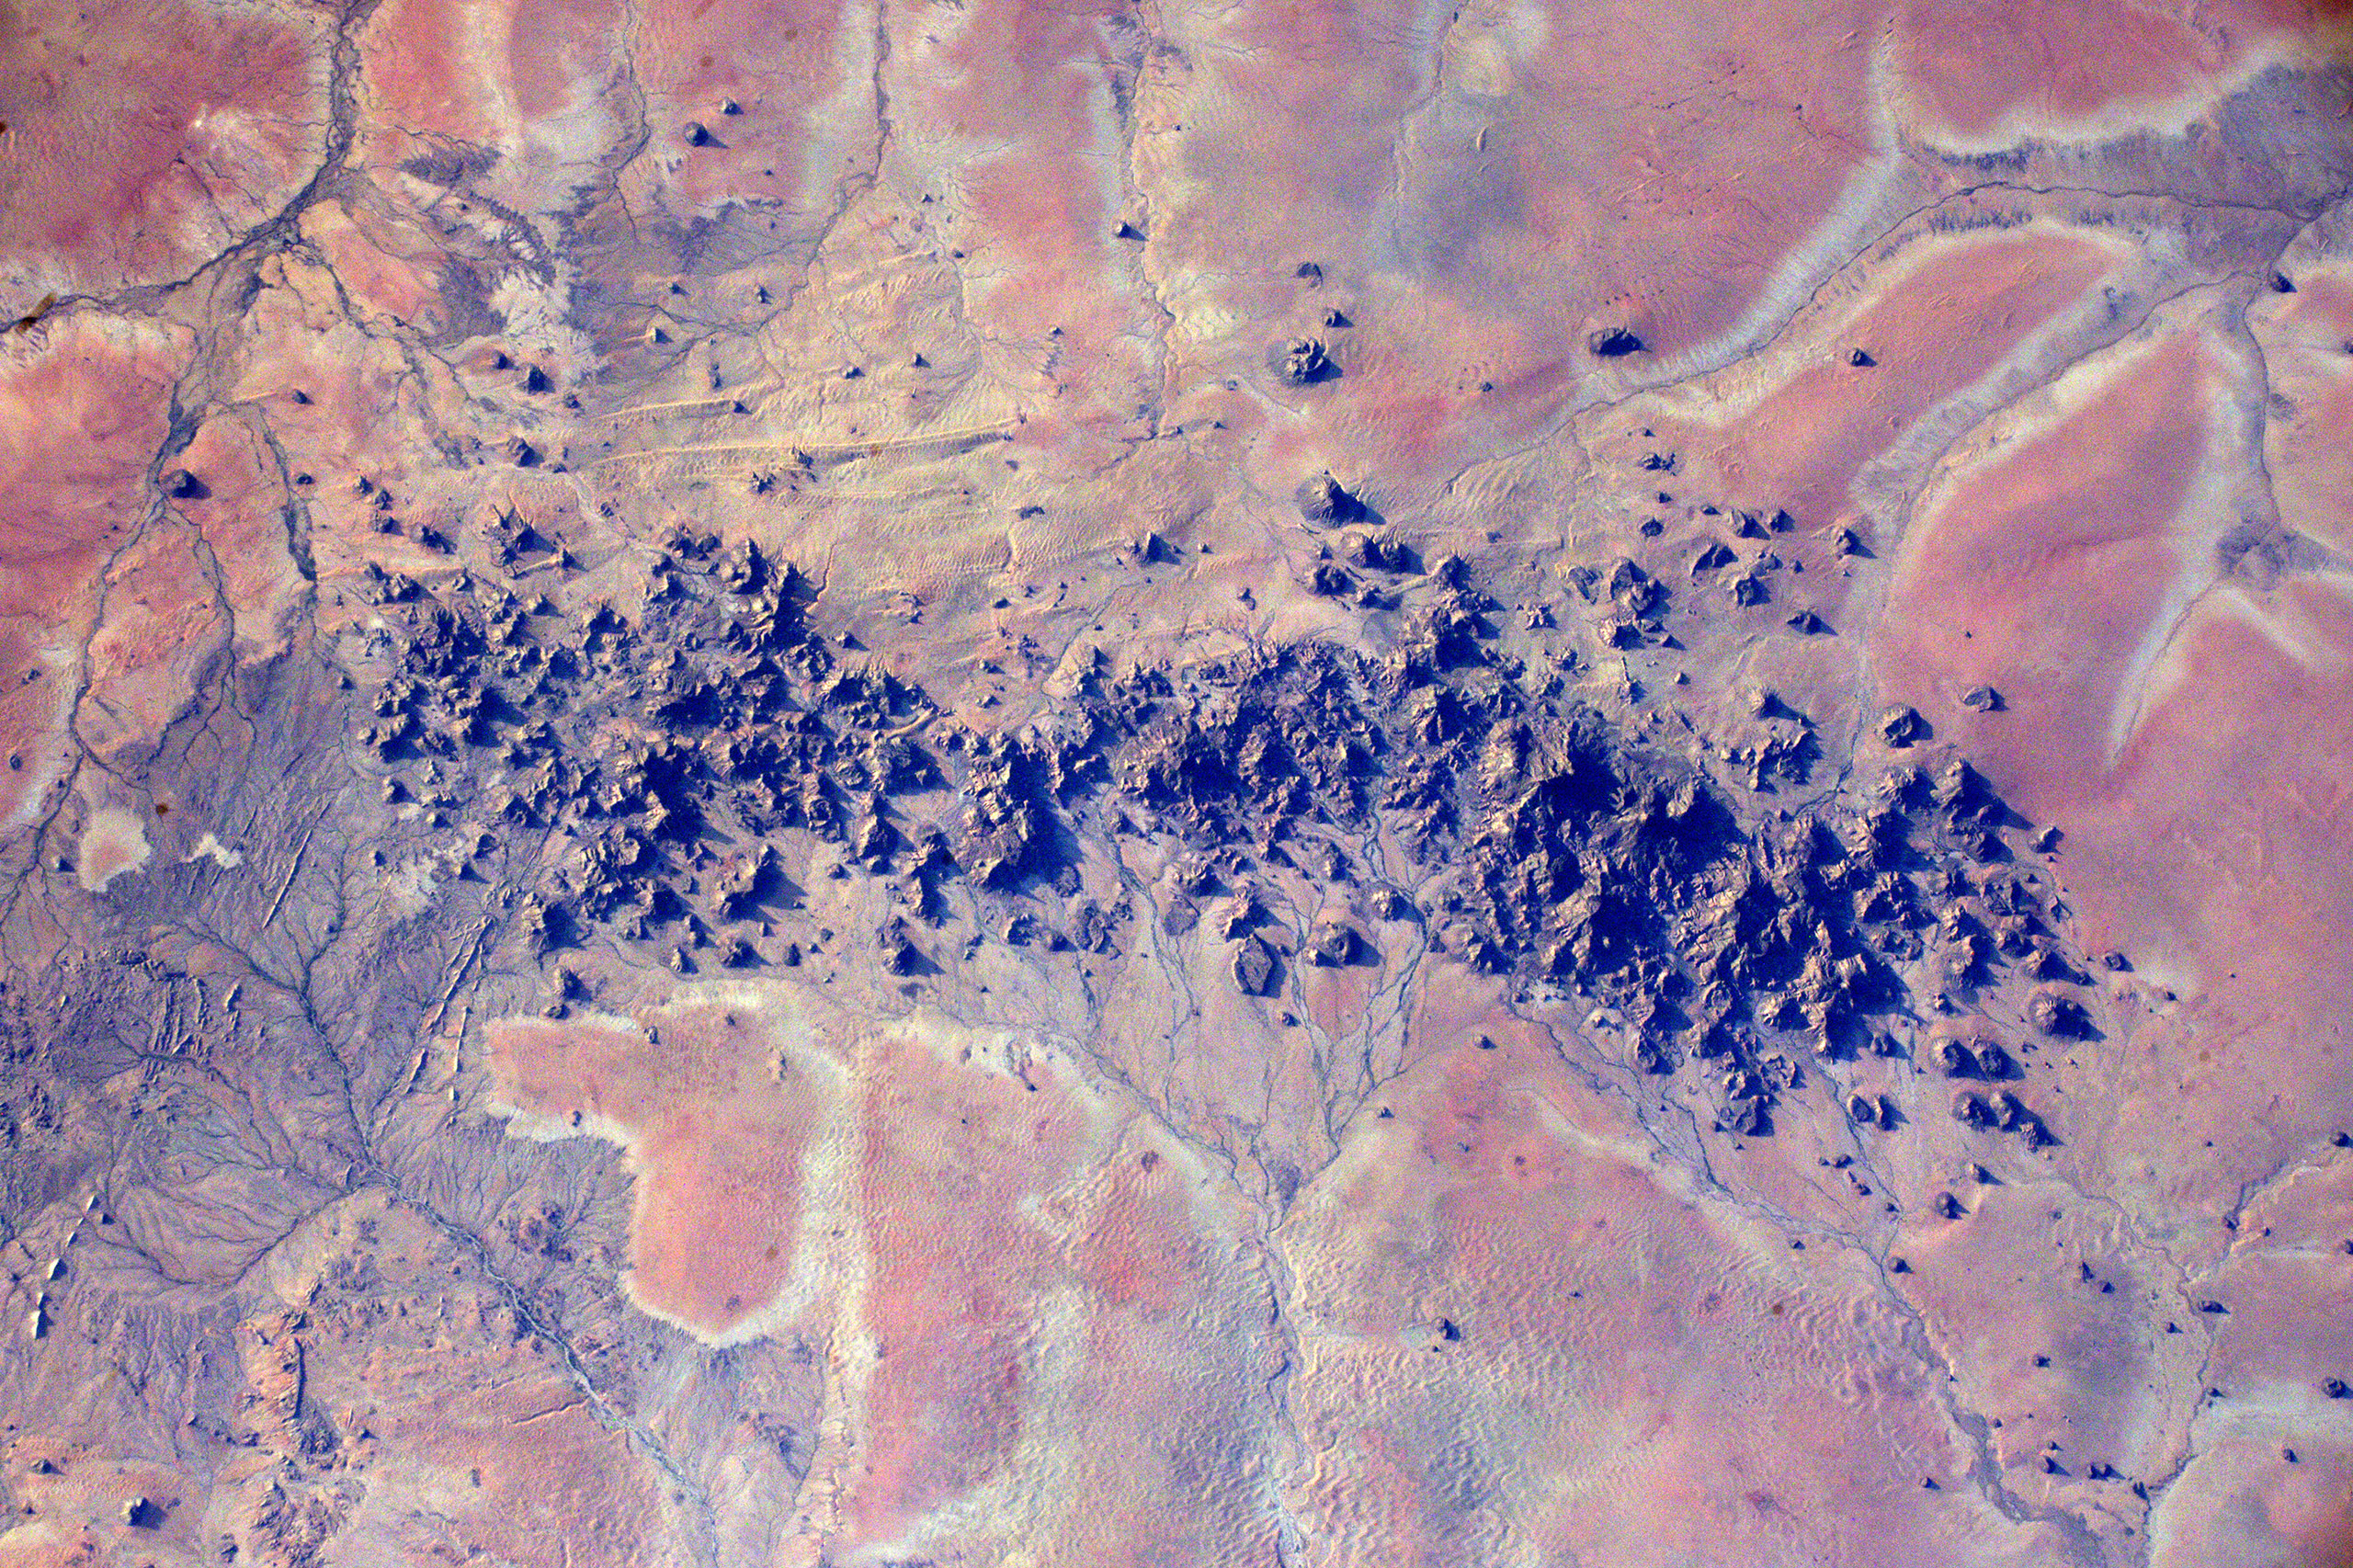 Rock formations in Mellit, Sudan, Feb. 27, 2016.